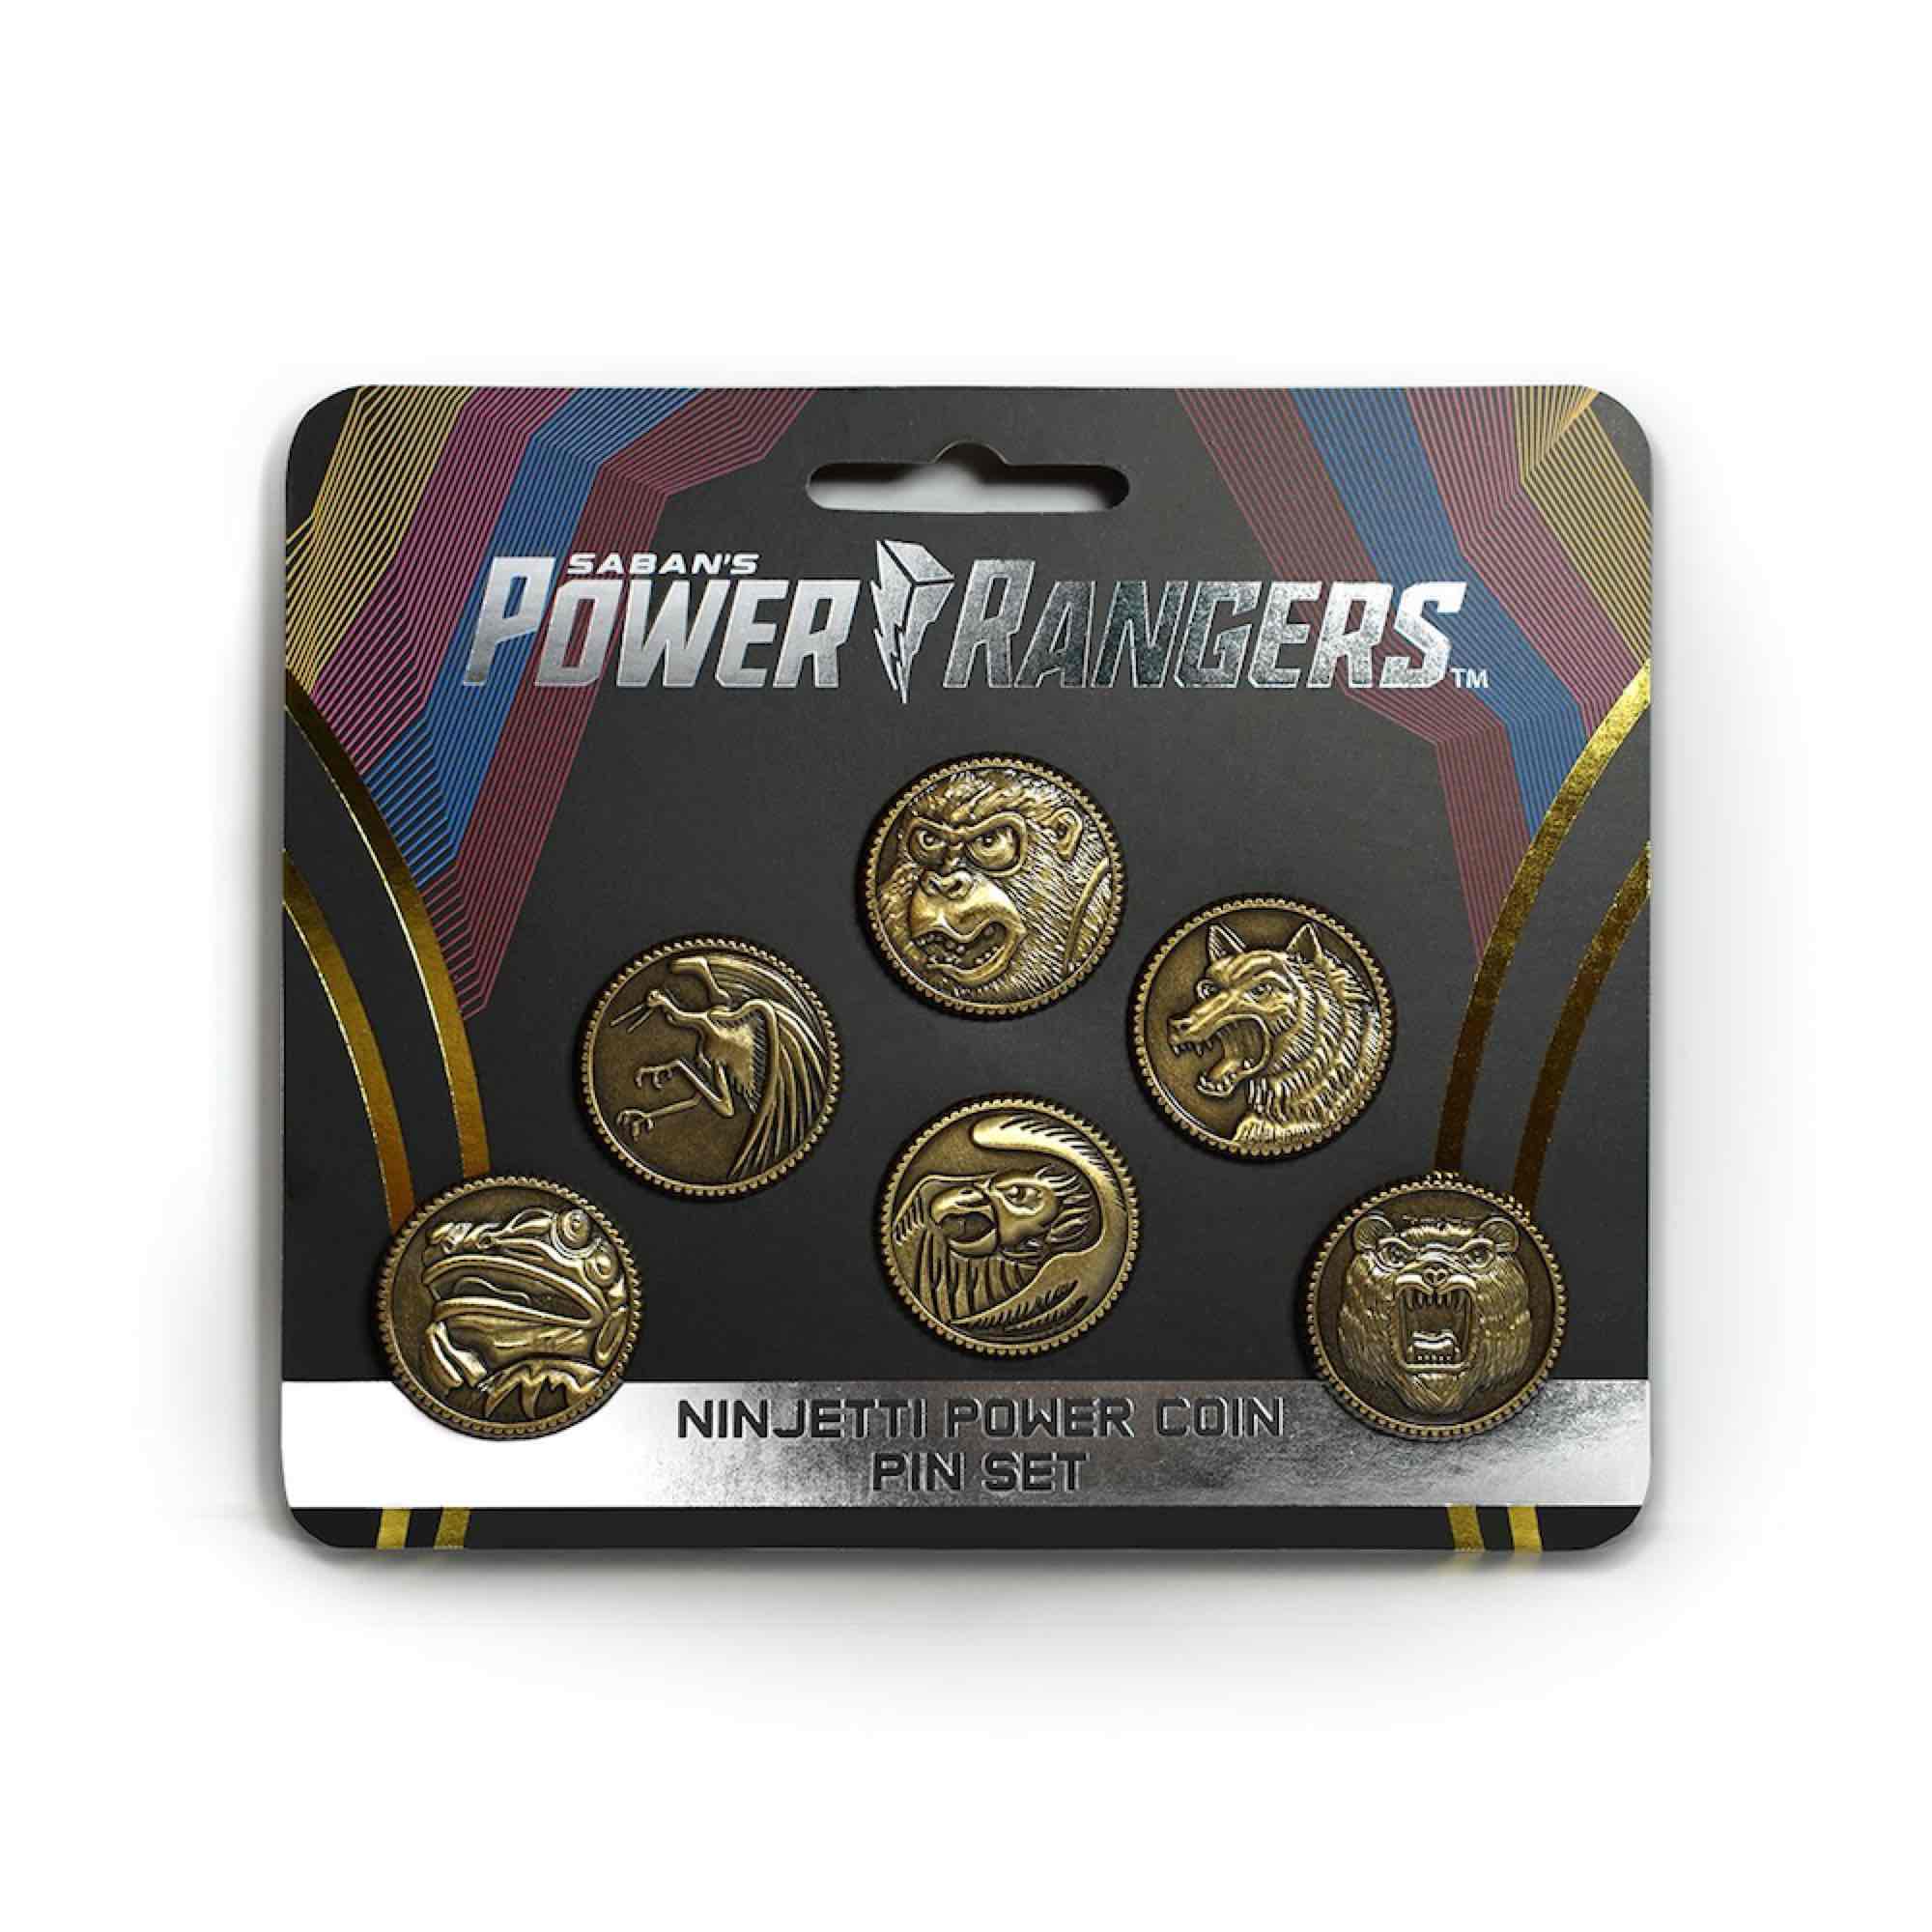 NINJETTI POWER COIN SET 6 PINS 2 CM POWER RANGERS